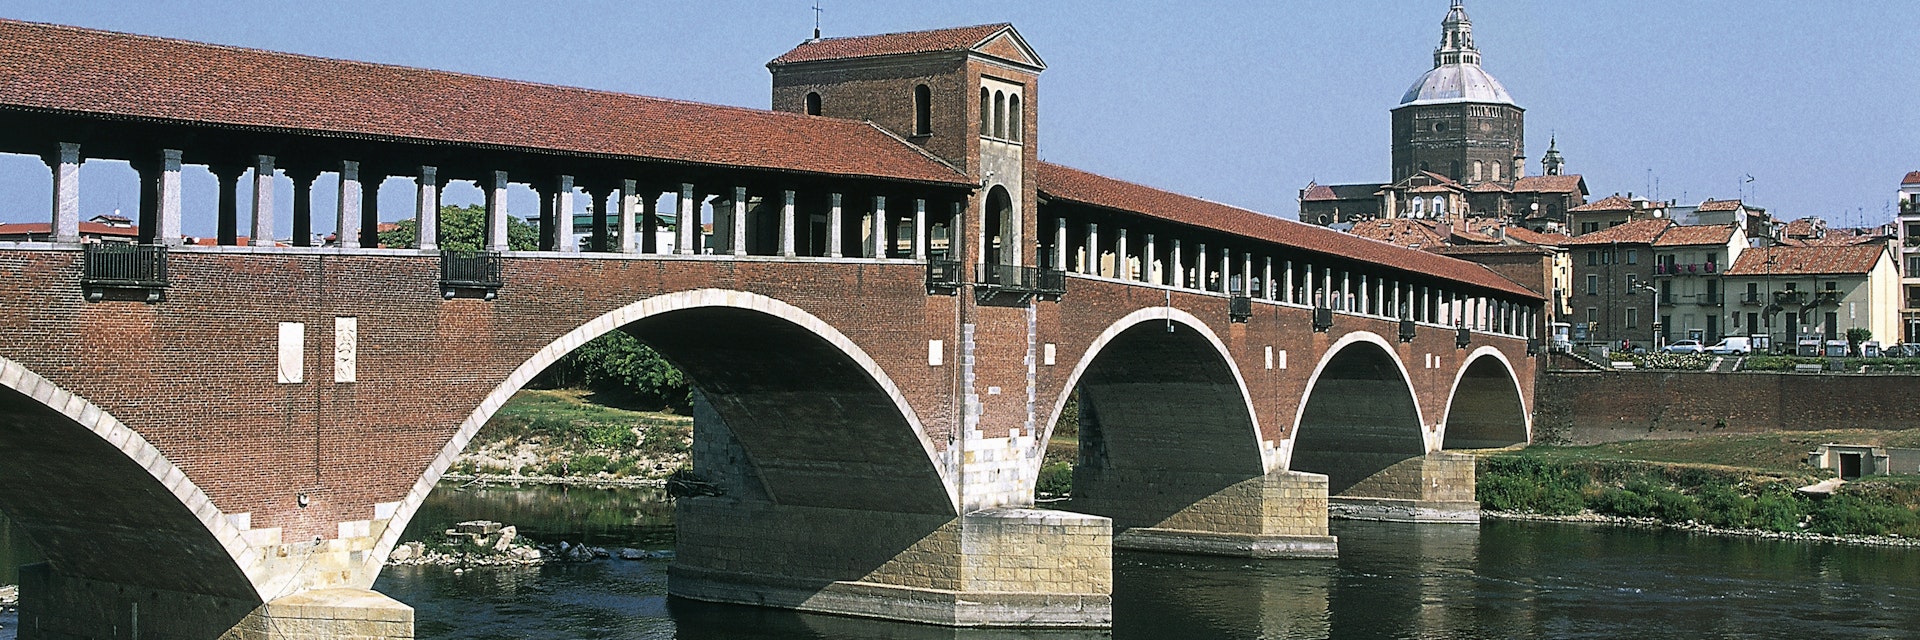 Covered bridge (Old bridge) over Ticino river, Pavia, Lombardy, Italy